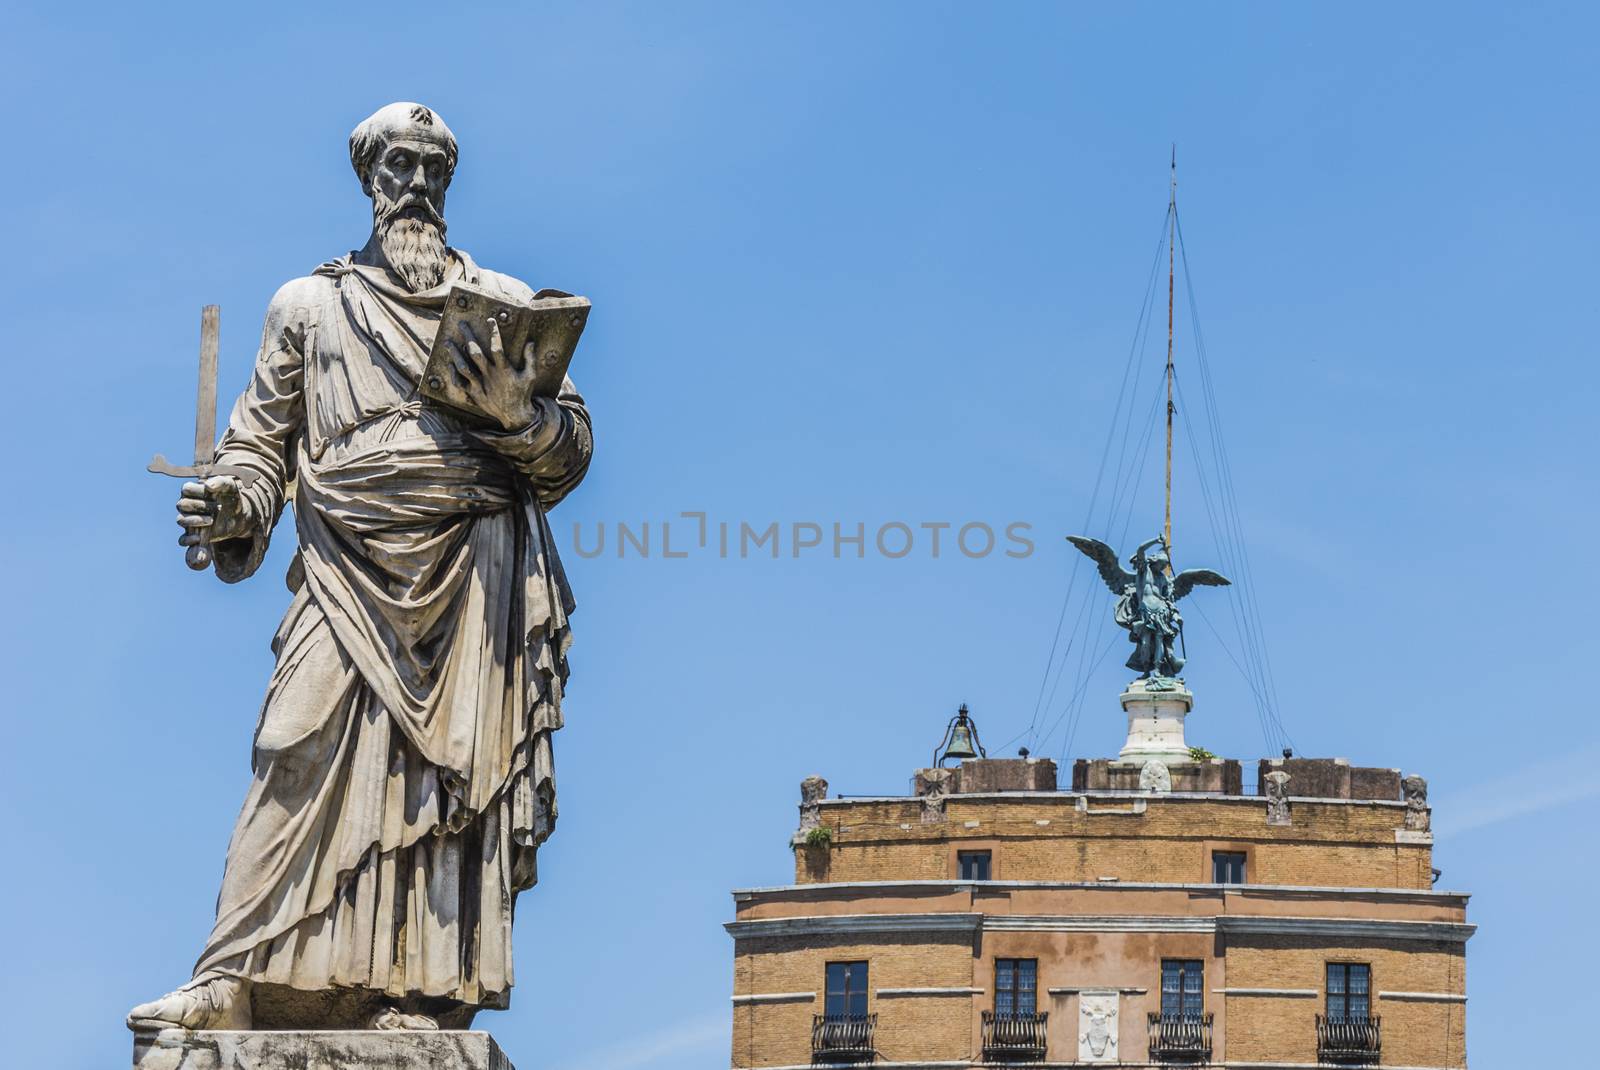 Saint Paul Statue in Rome by rarrarorro